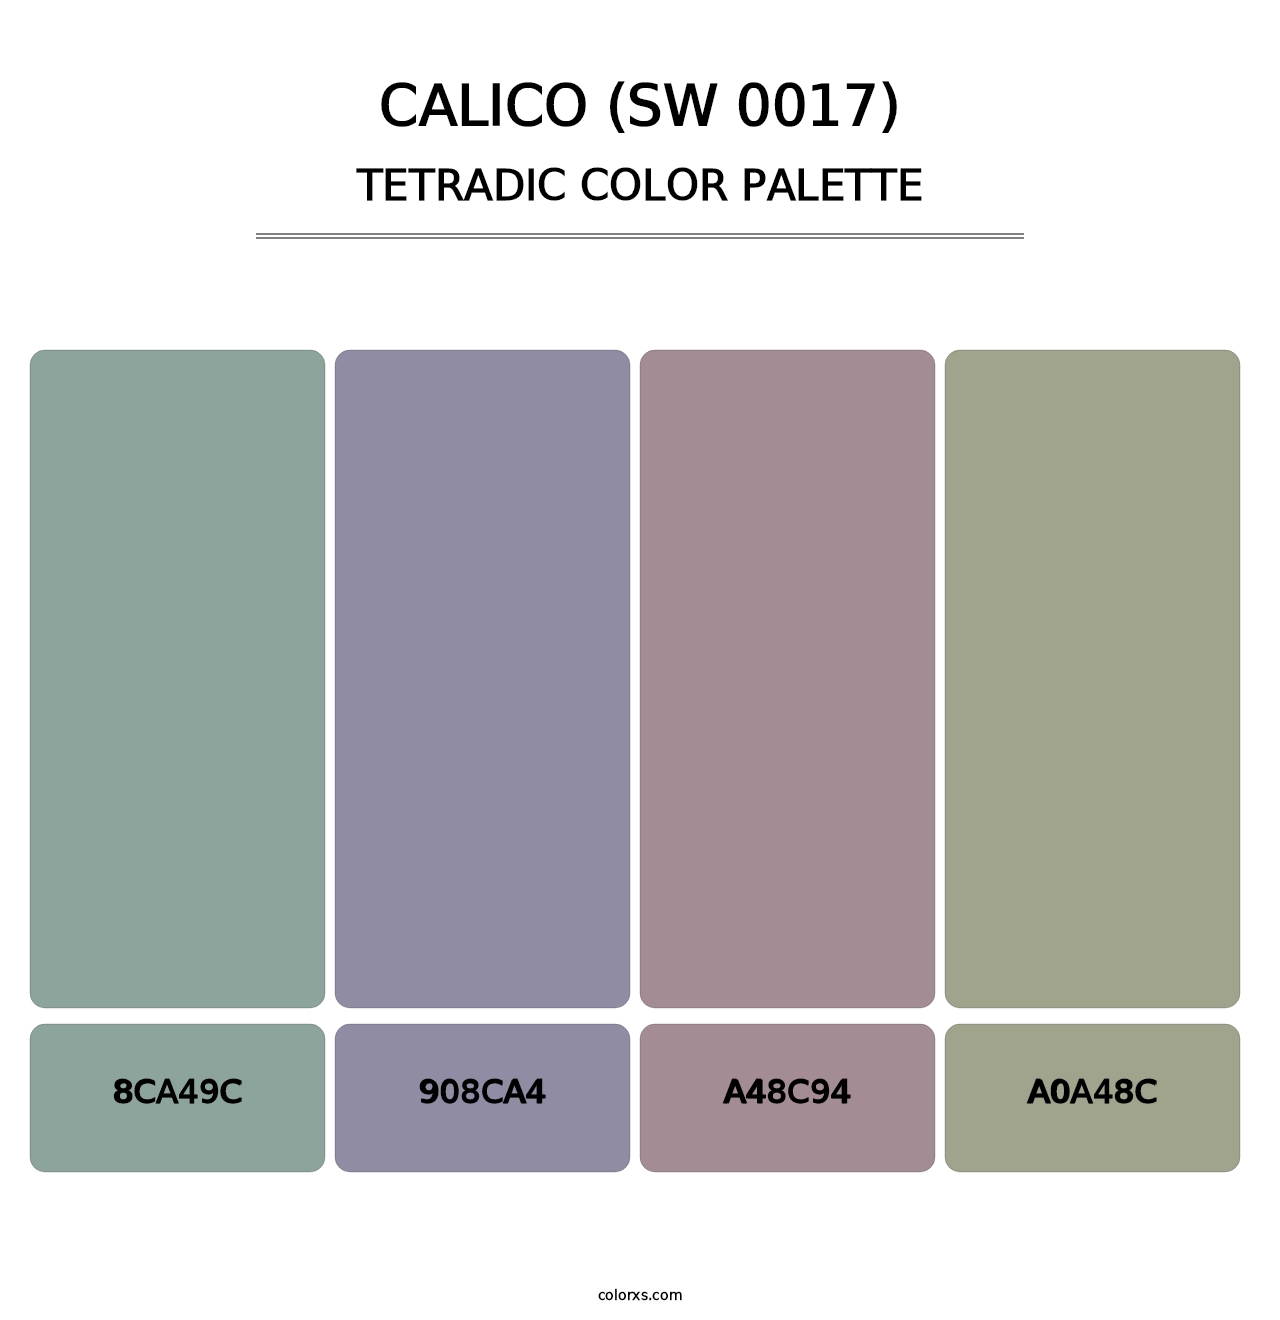 Calico (SW 0017) - Tetradic Color Palette